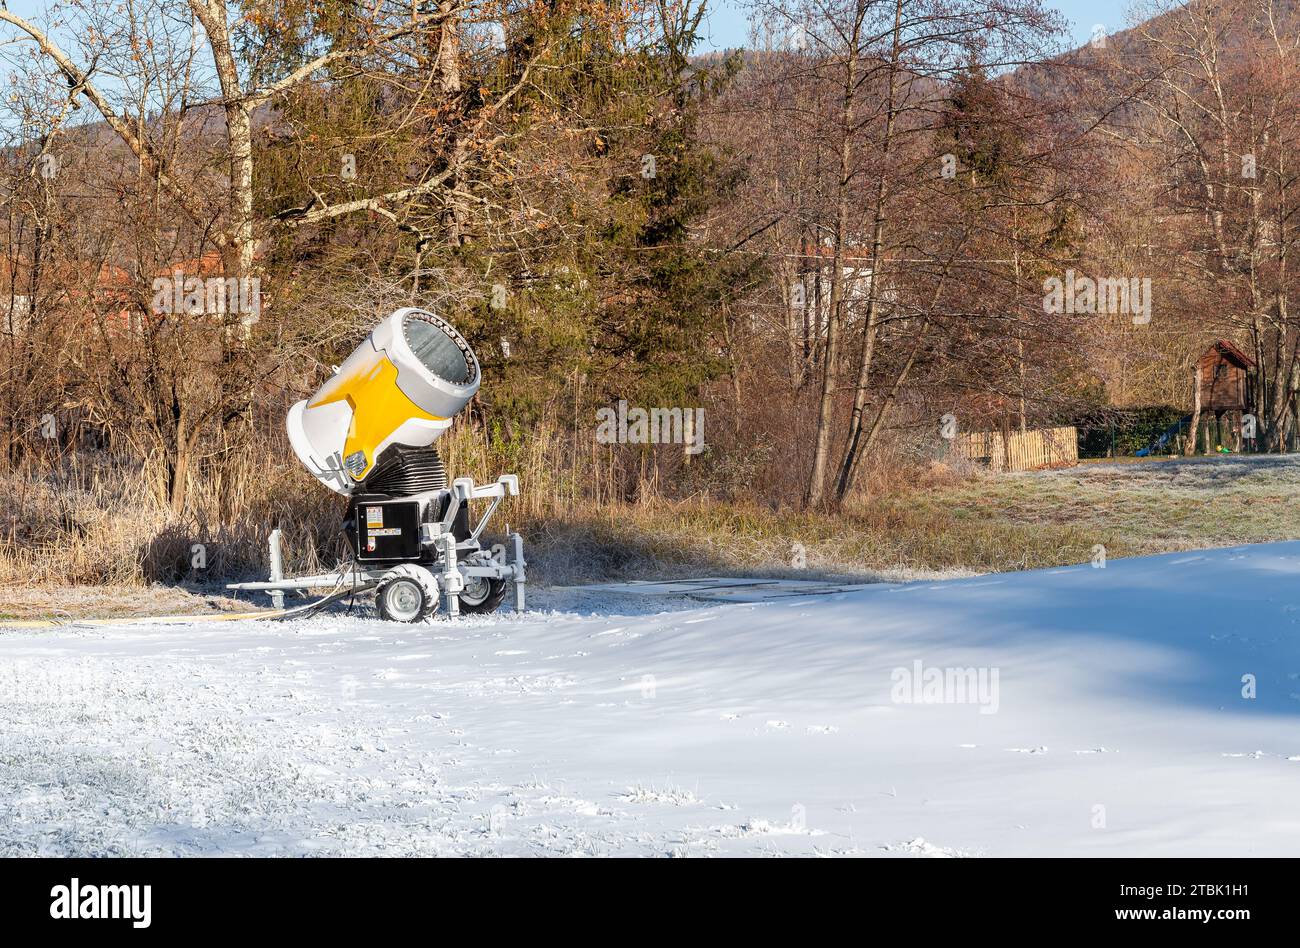 Cañón de nieve para producir nieve artificial para pistas de esquí. Sistema de nieve artificial. Foto de stock